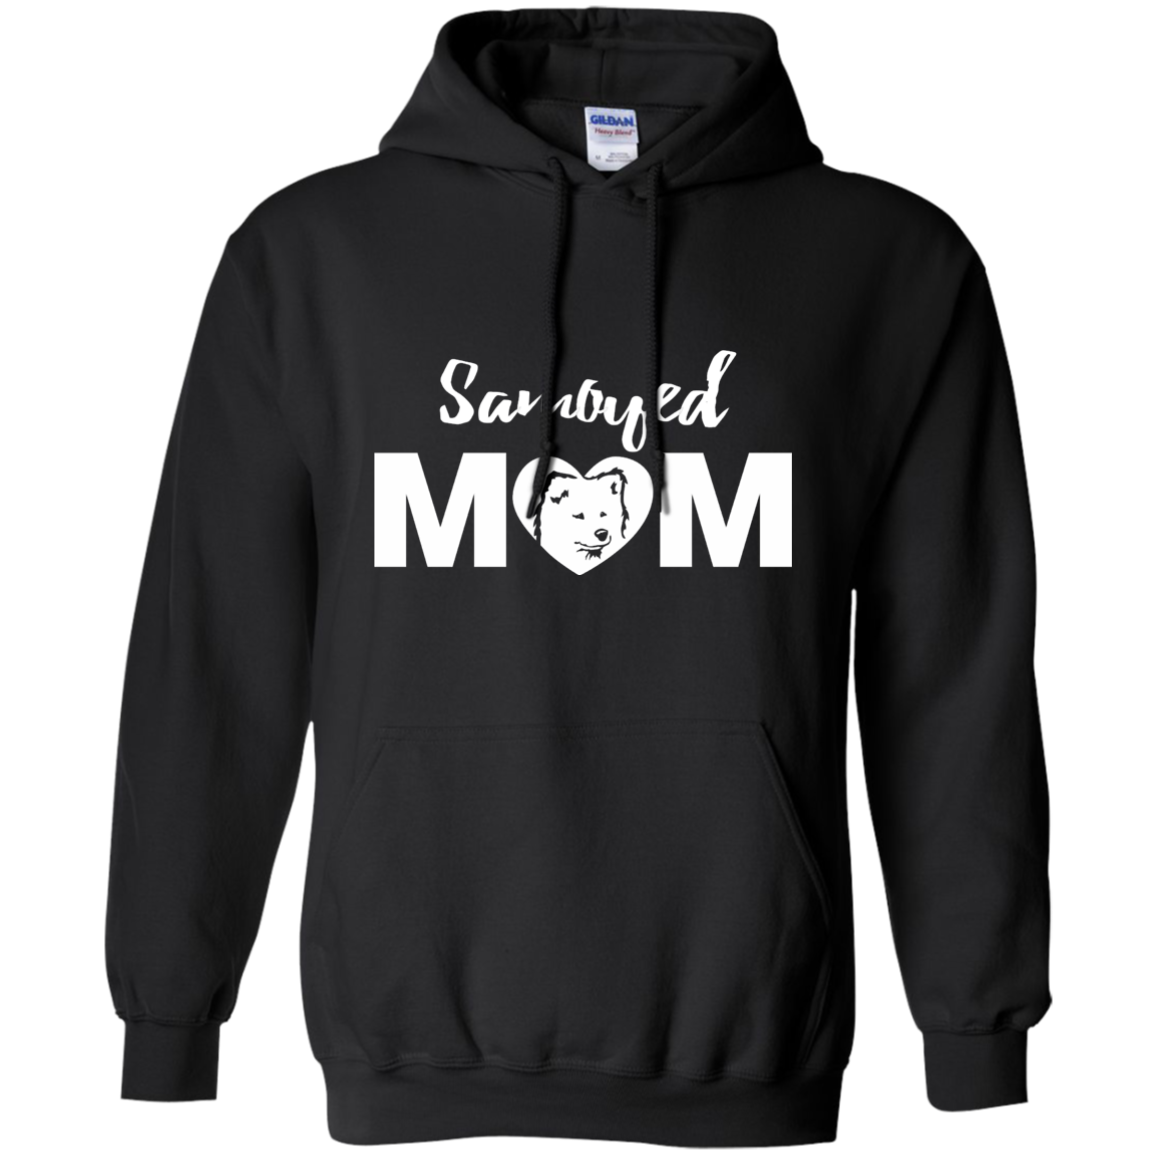 Samoyed Mom - Dog - Pullover Hoodie